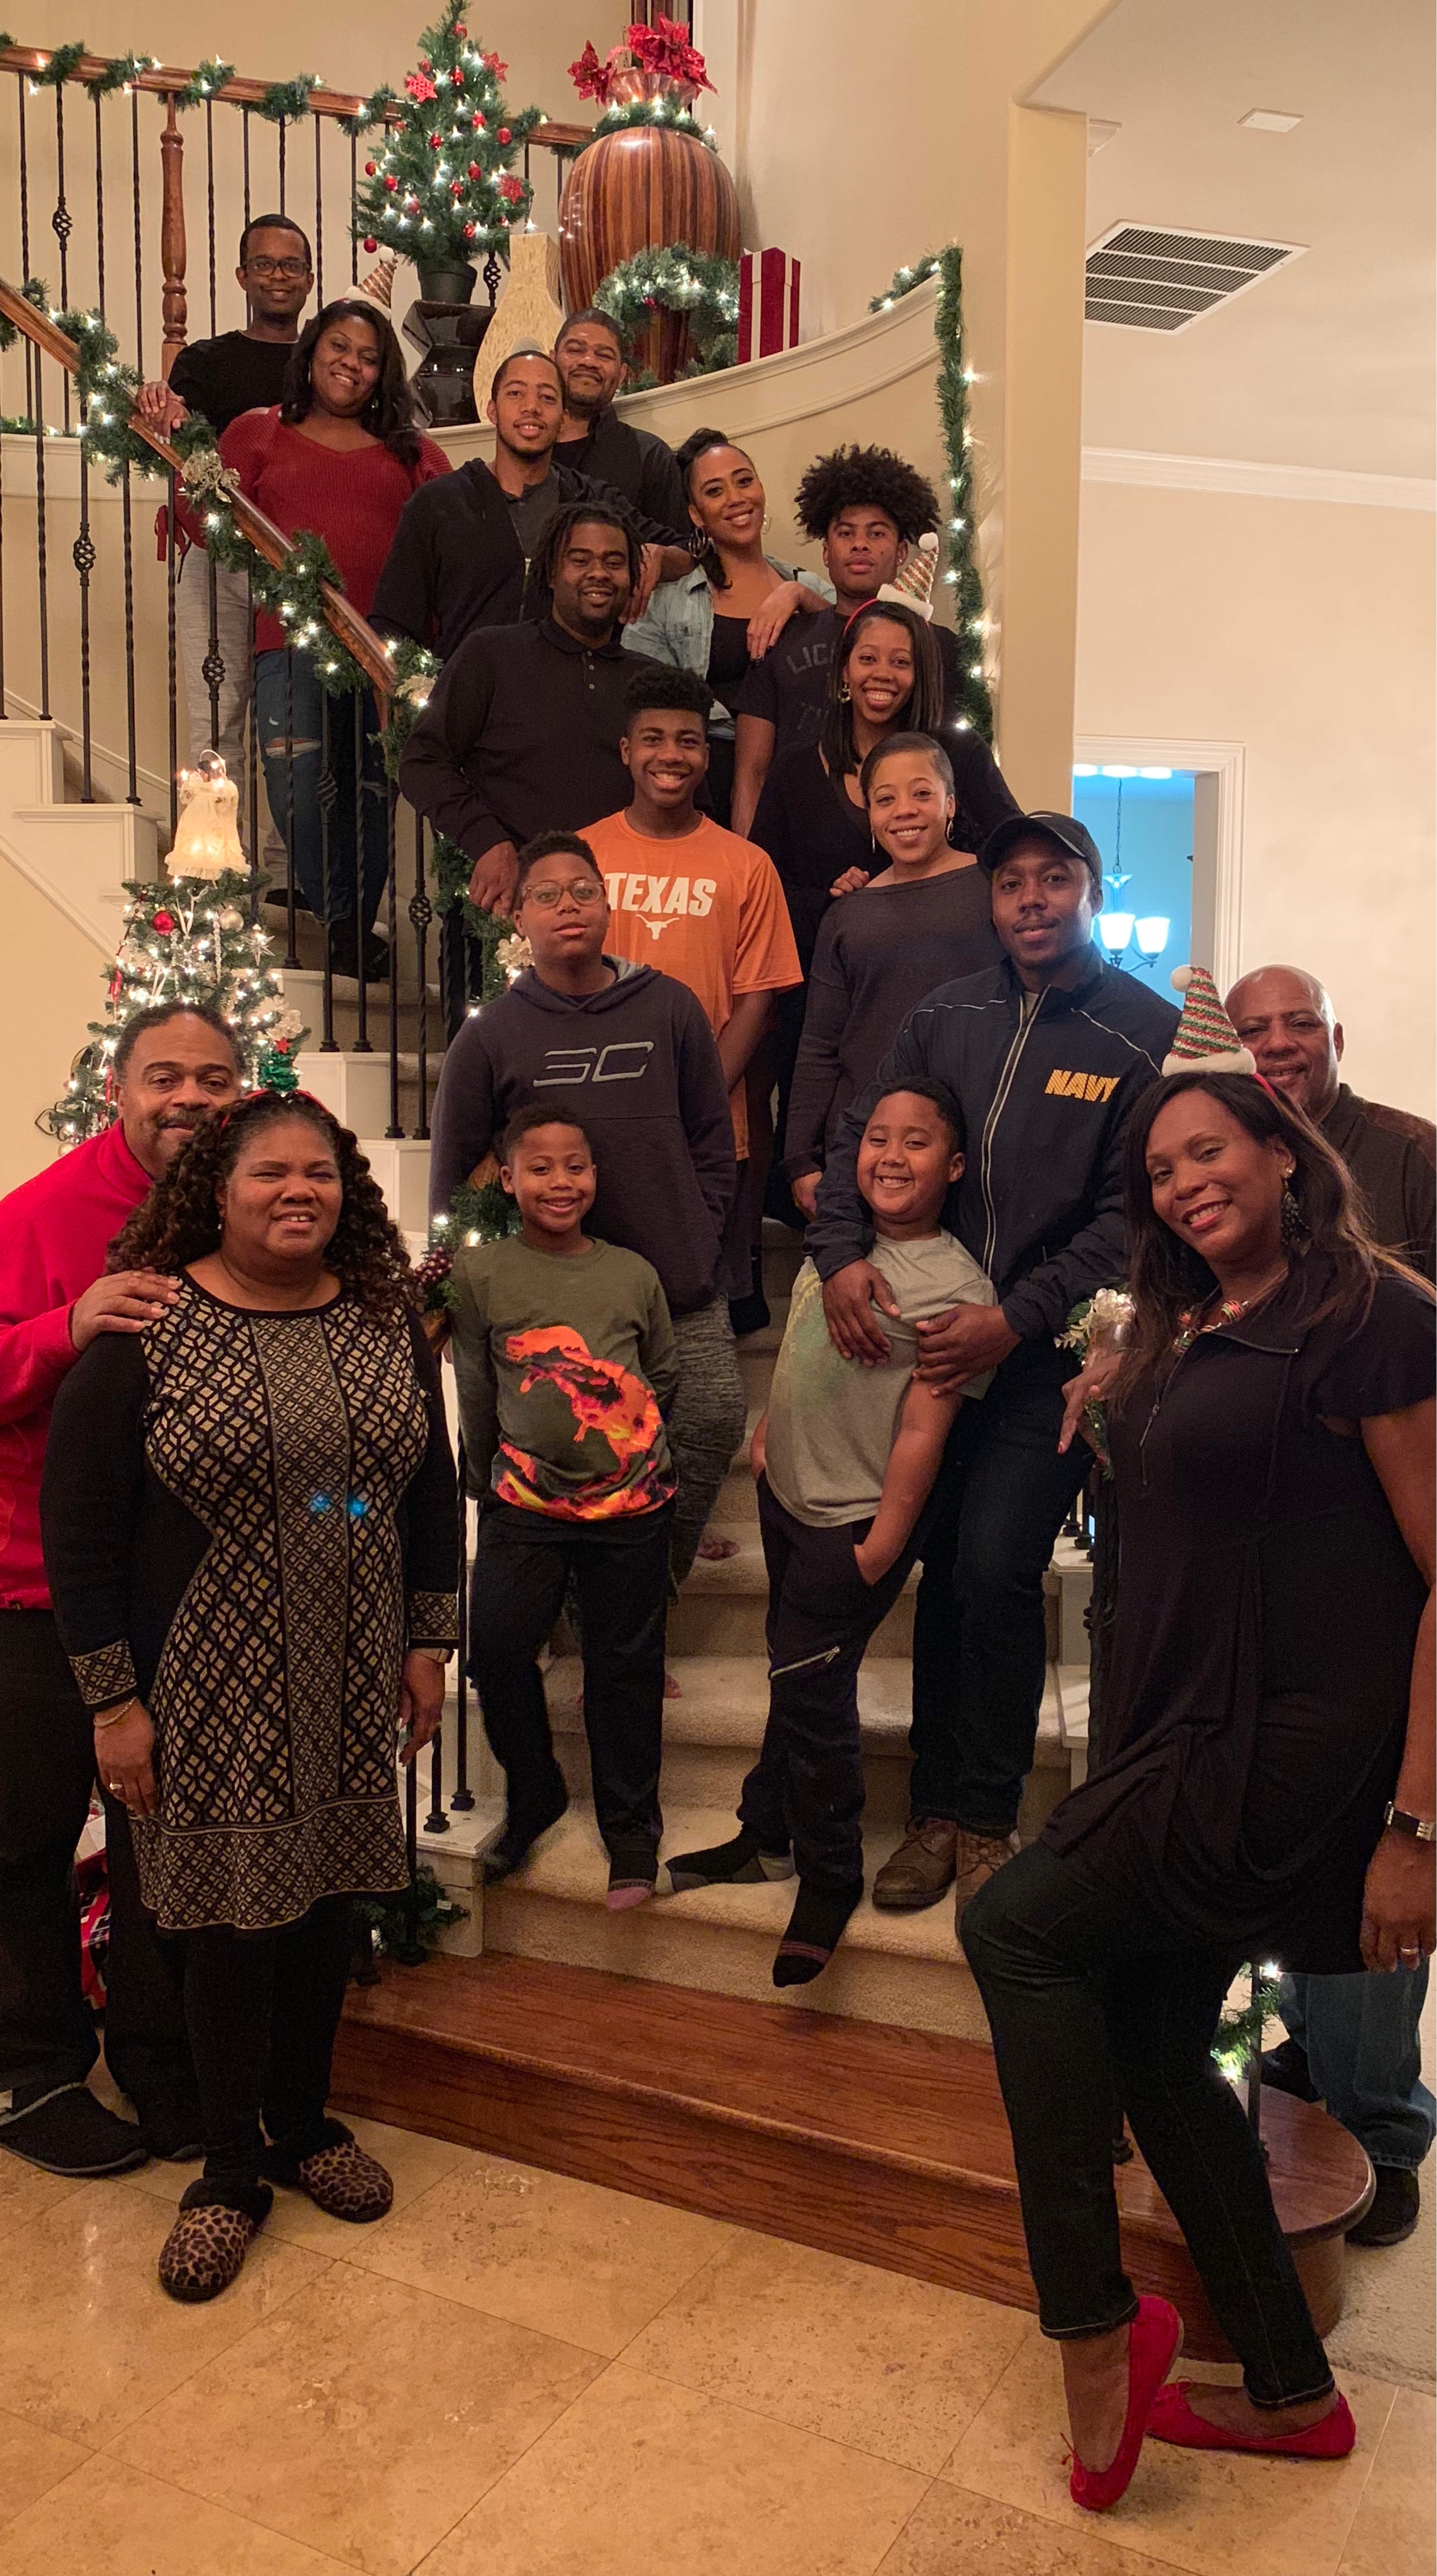 Nickoria and Family at Christmas